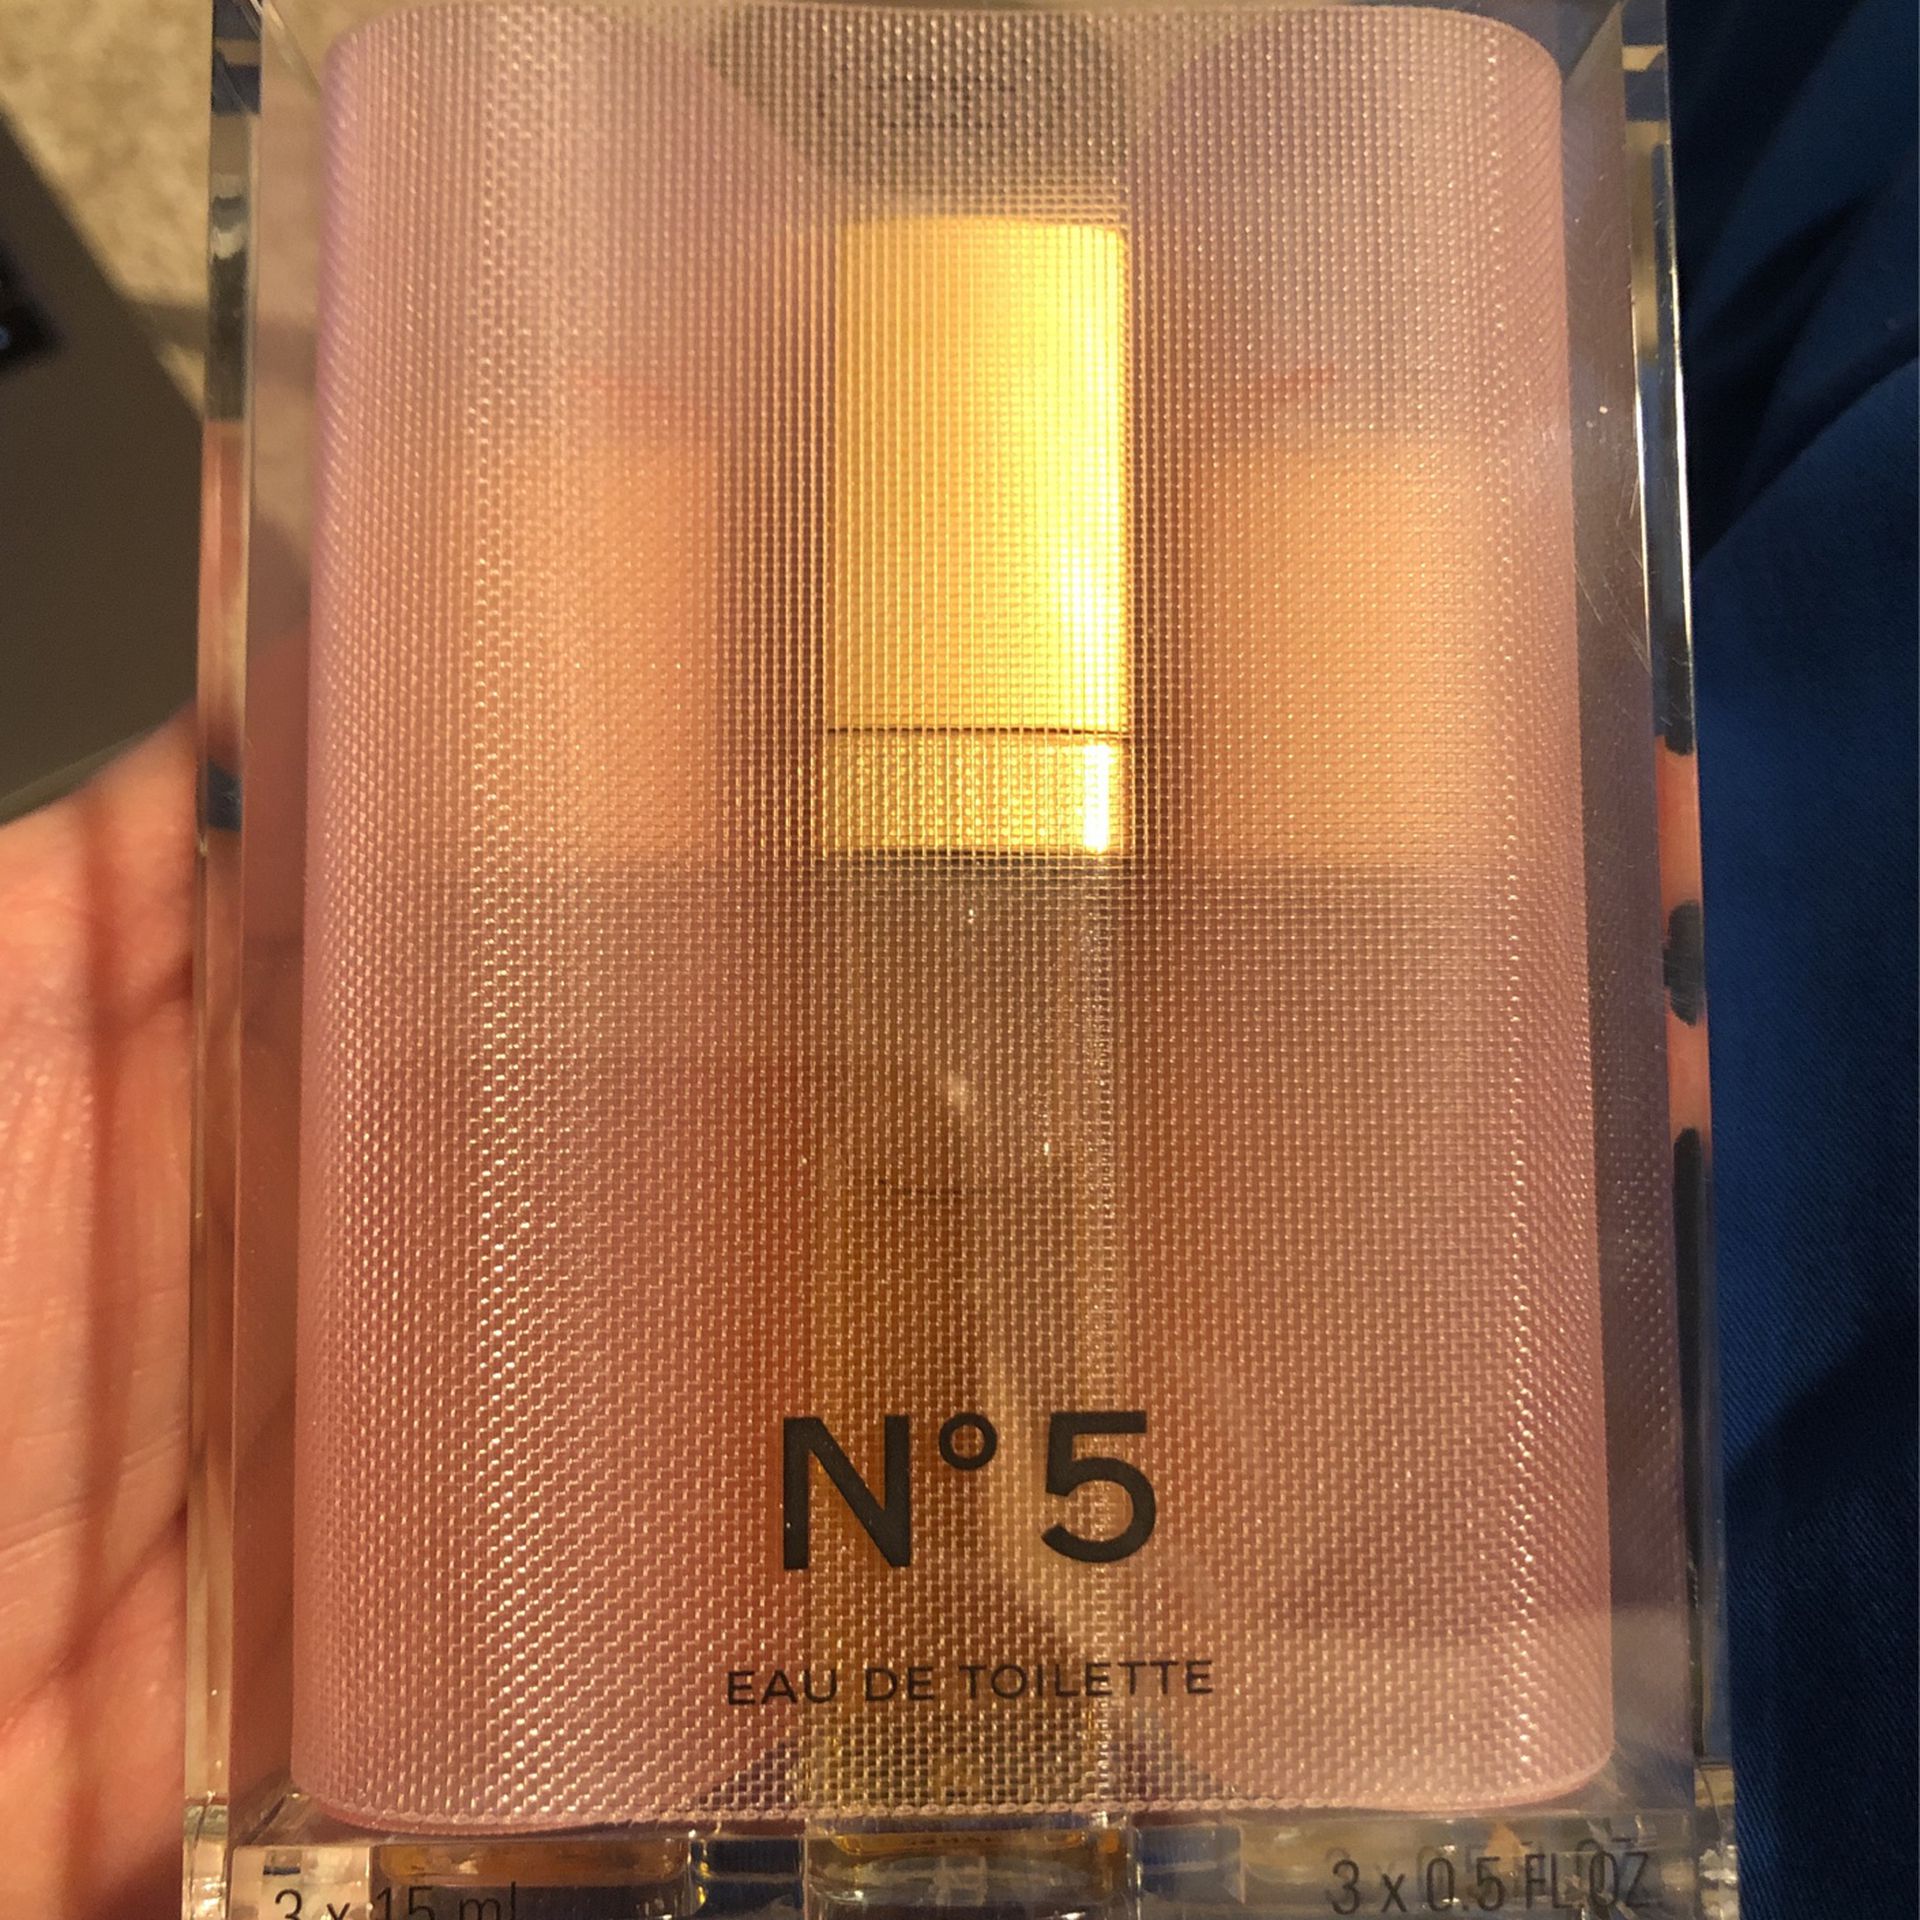 Chanel No5 Perfume